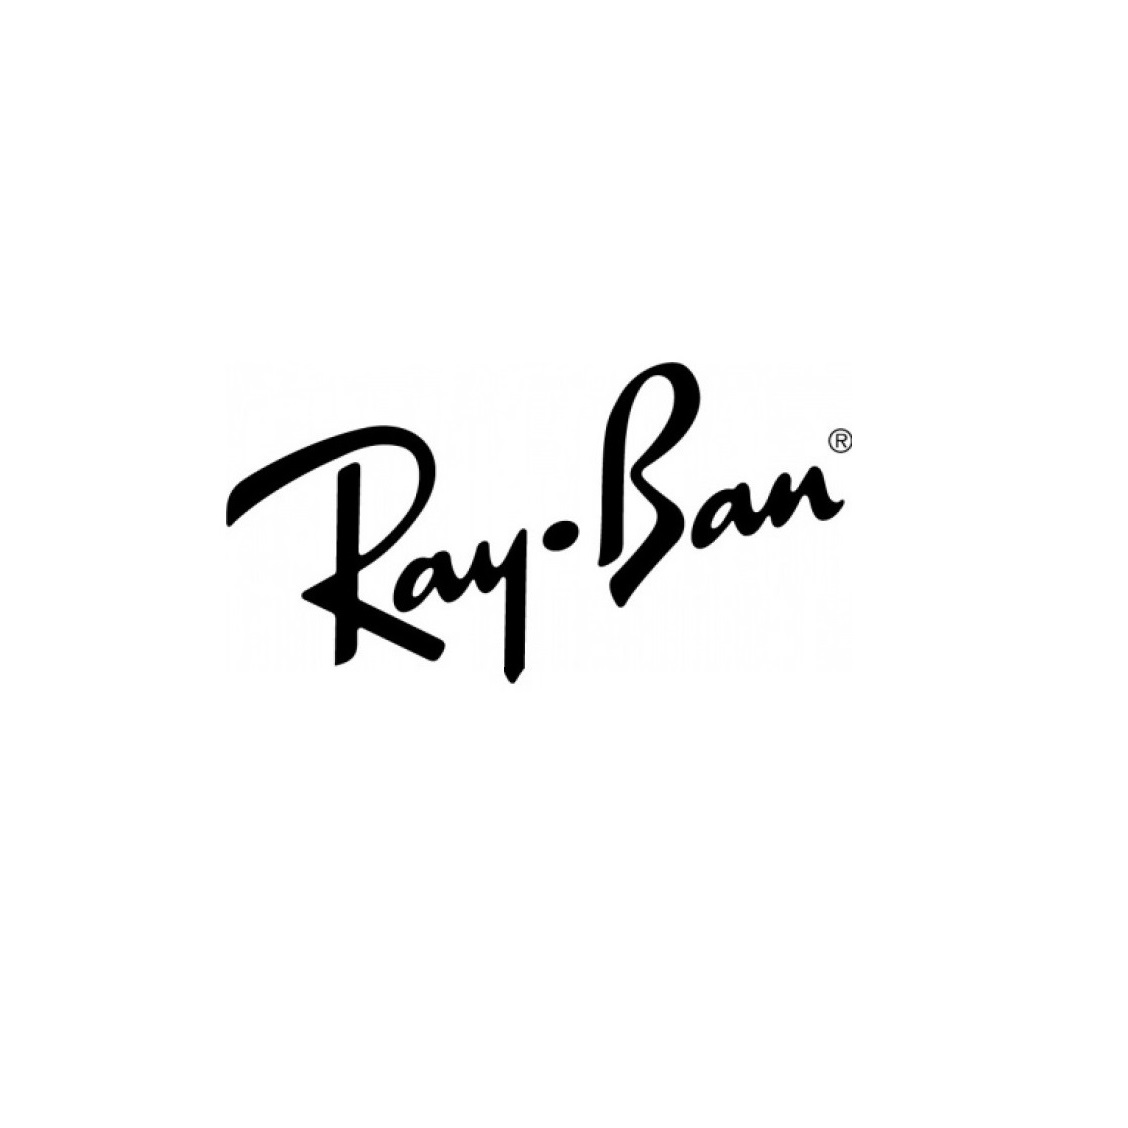 Ray Ban Logo.jpg